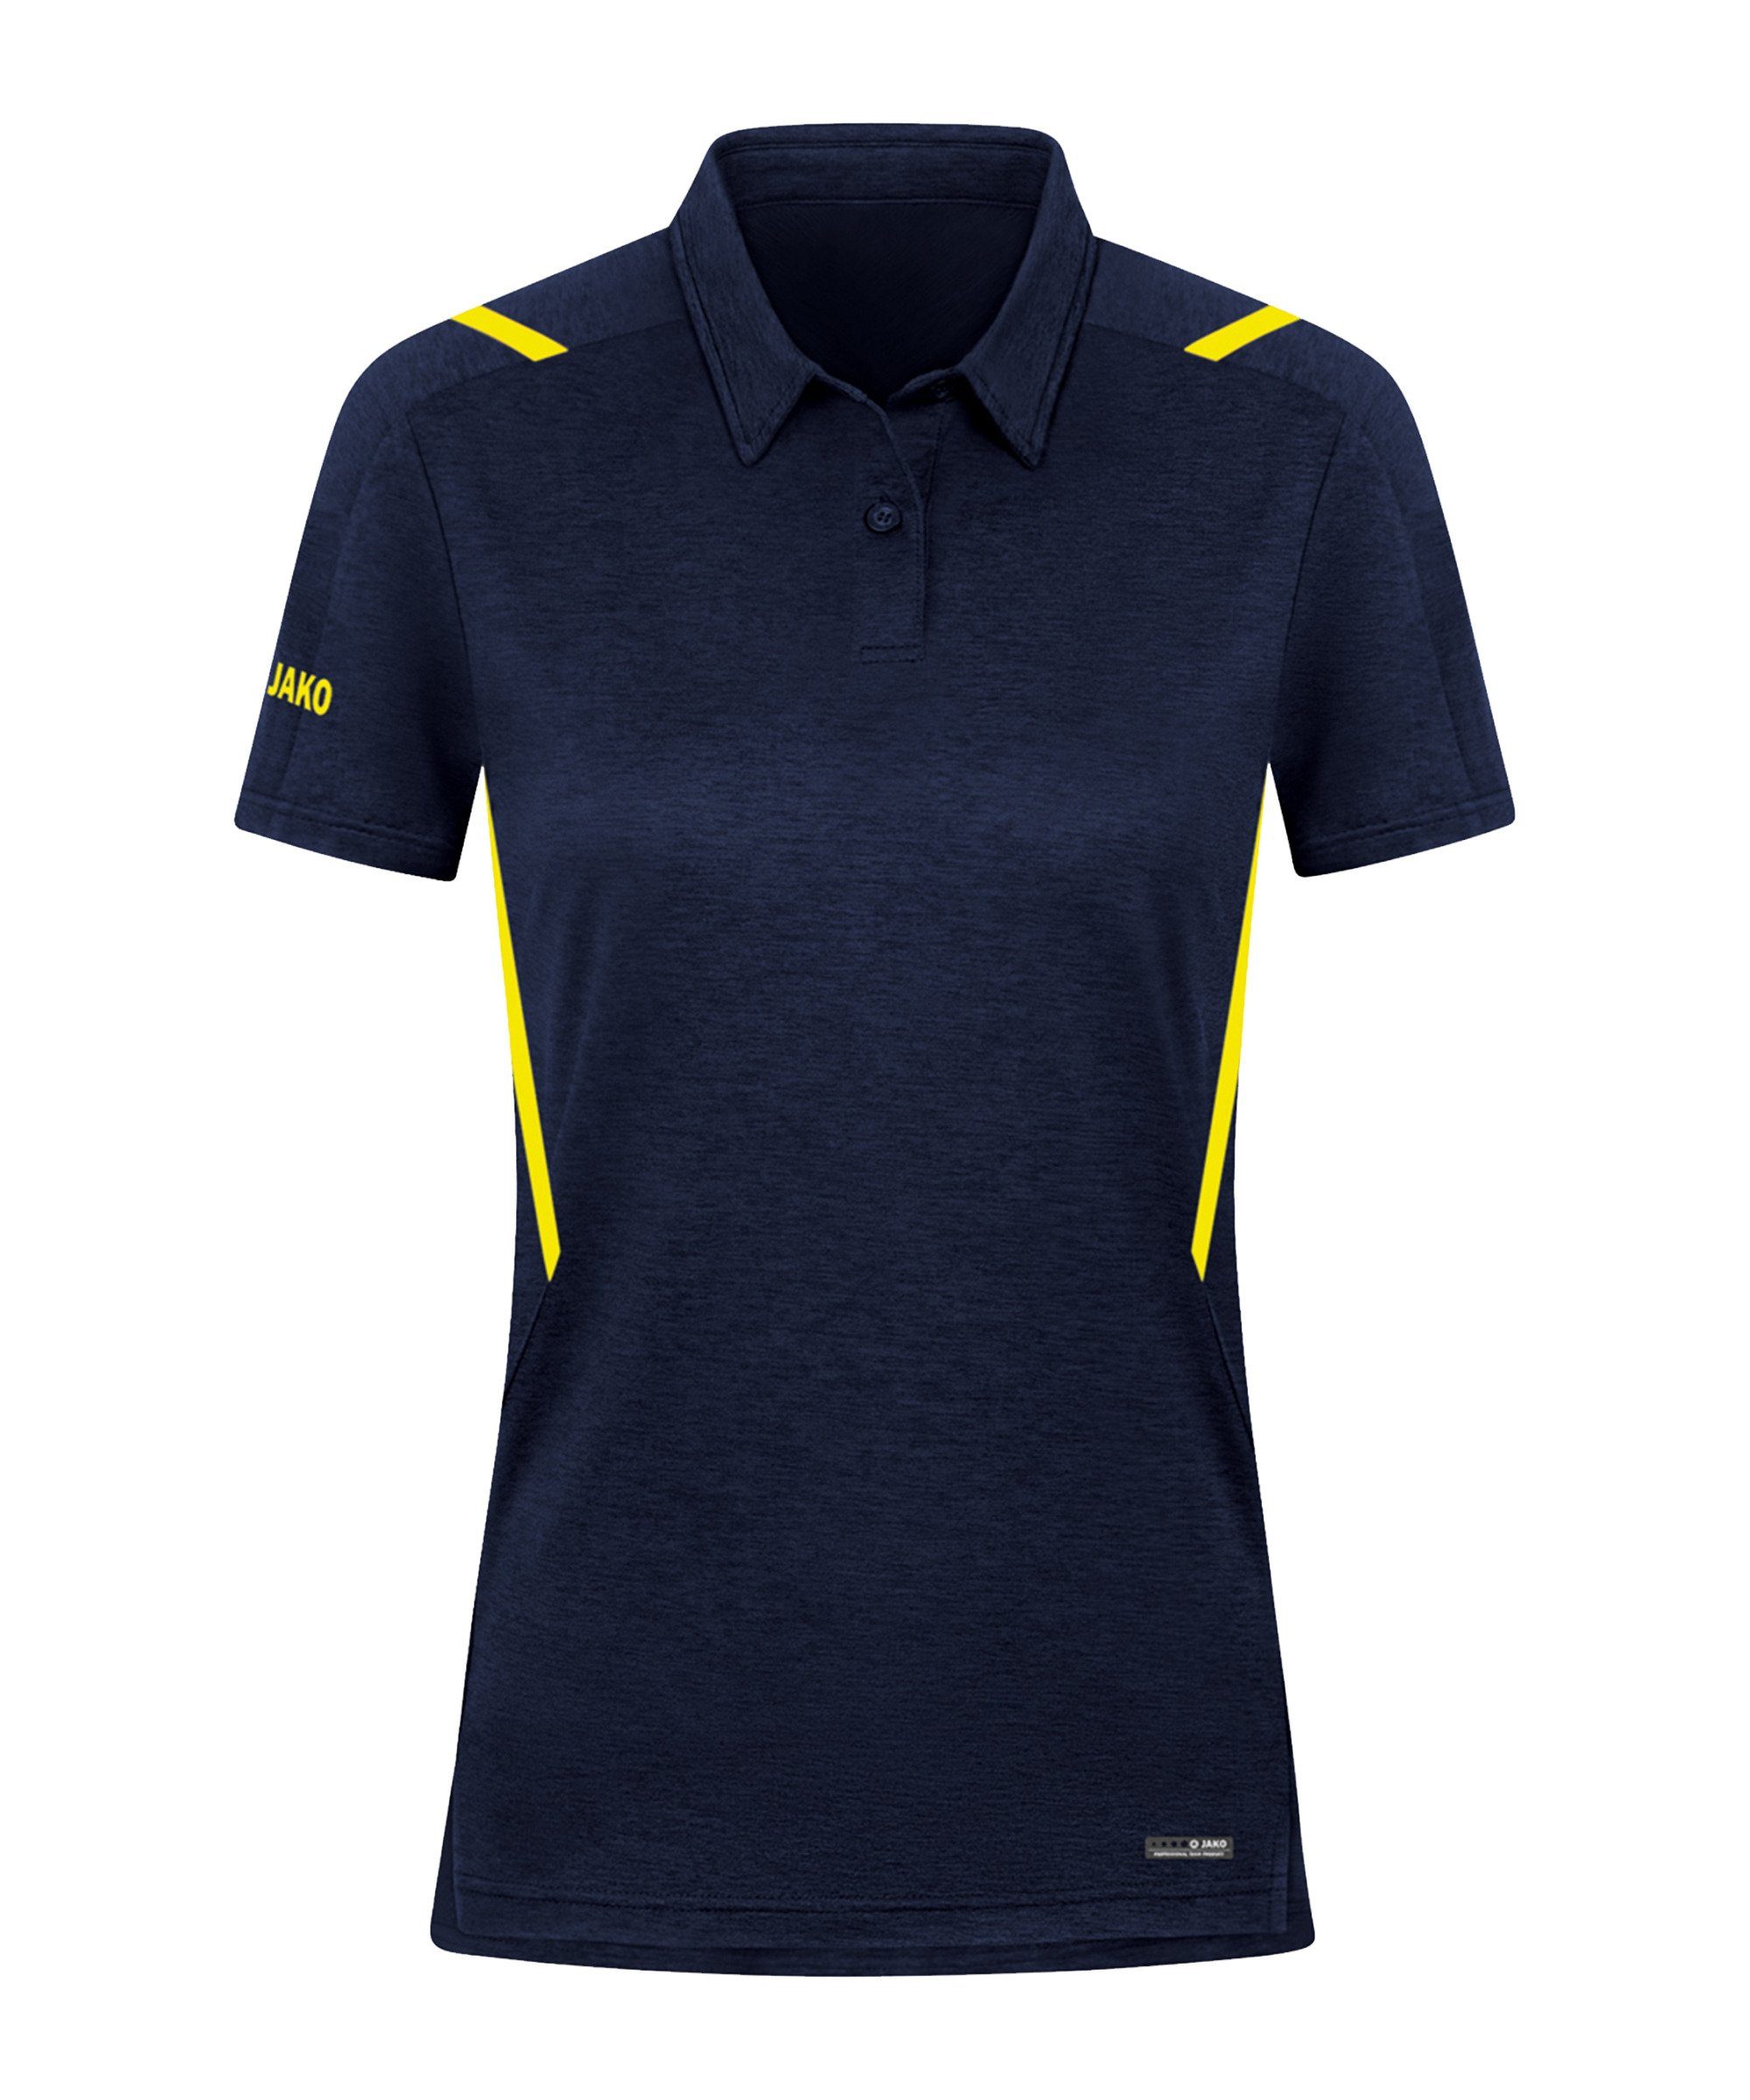 Jako Poloshirt Challenge Polo Damen default blaugelb | Poloshirts